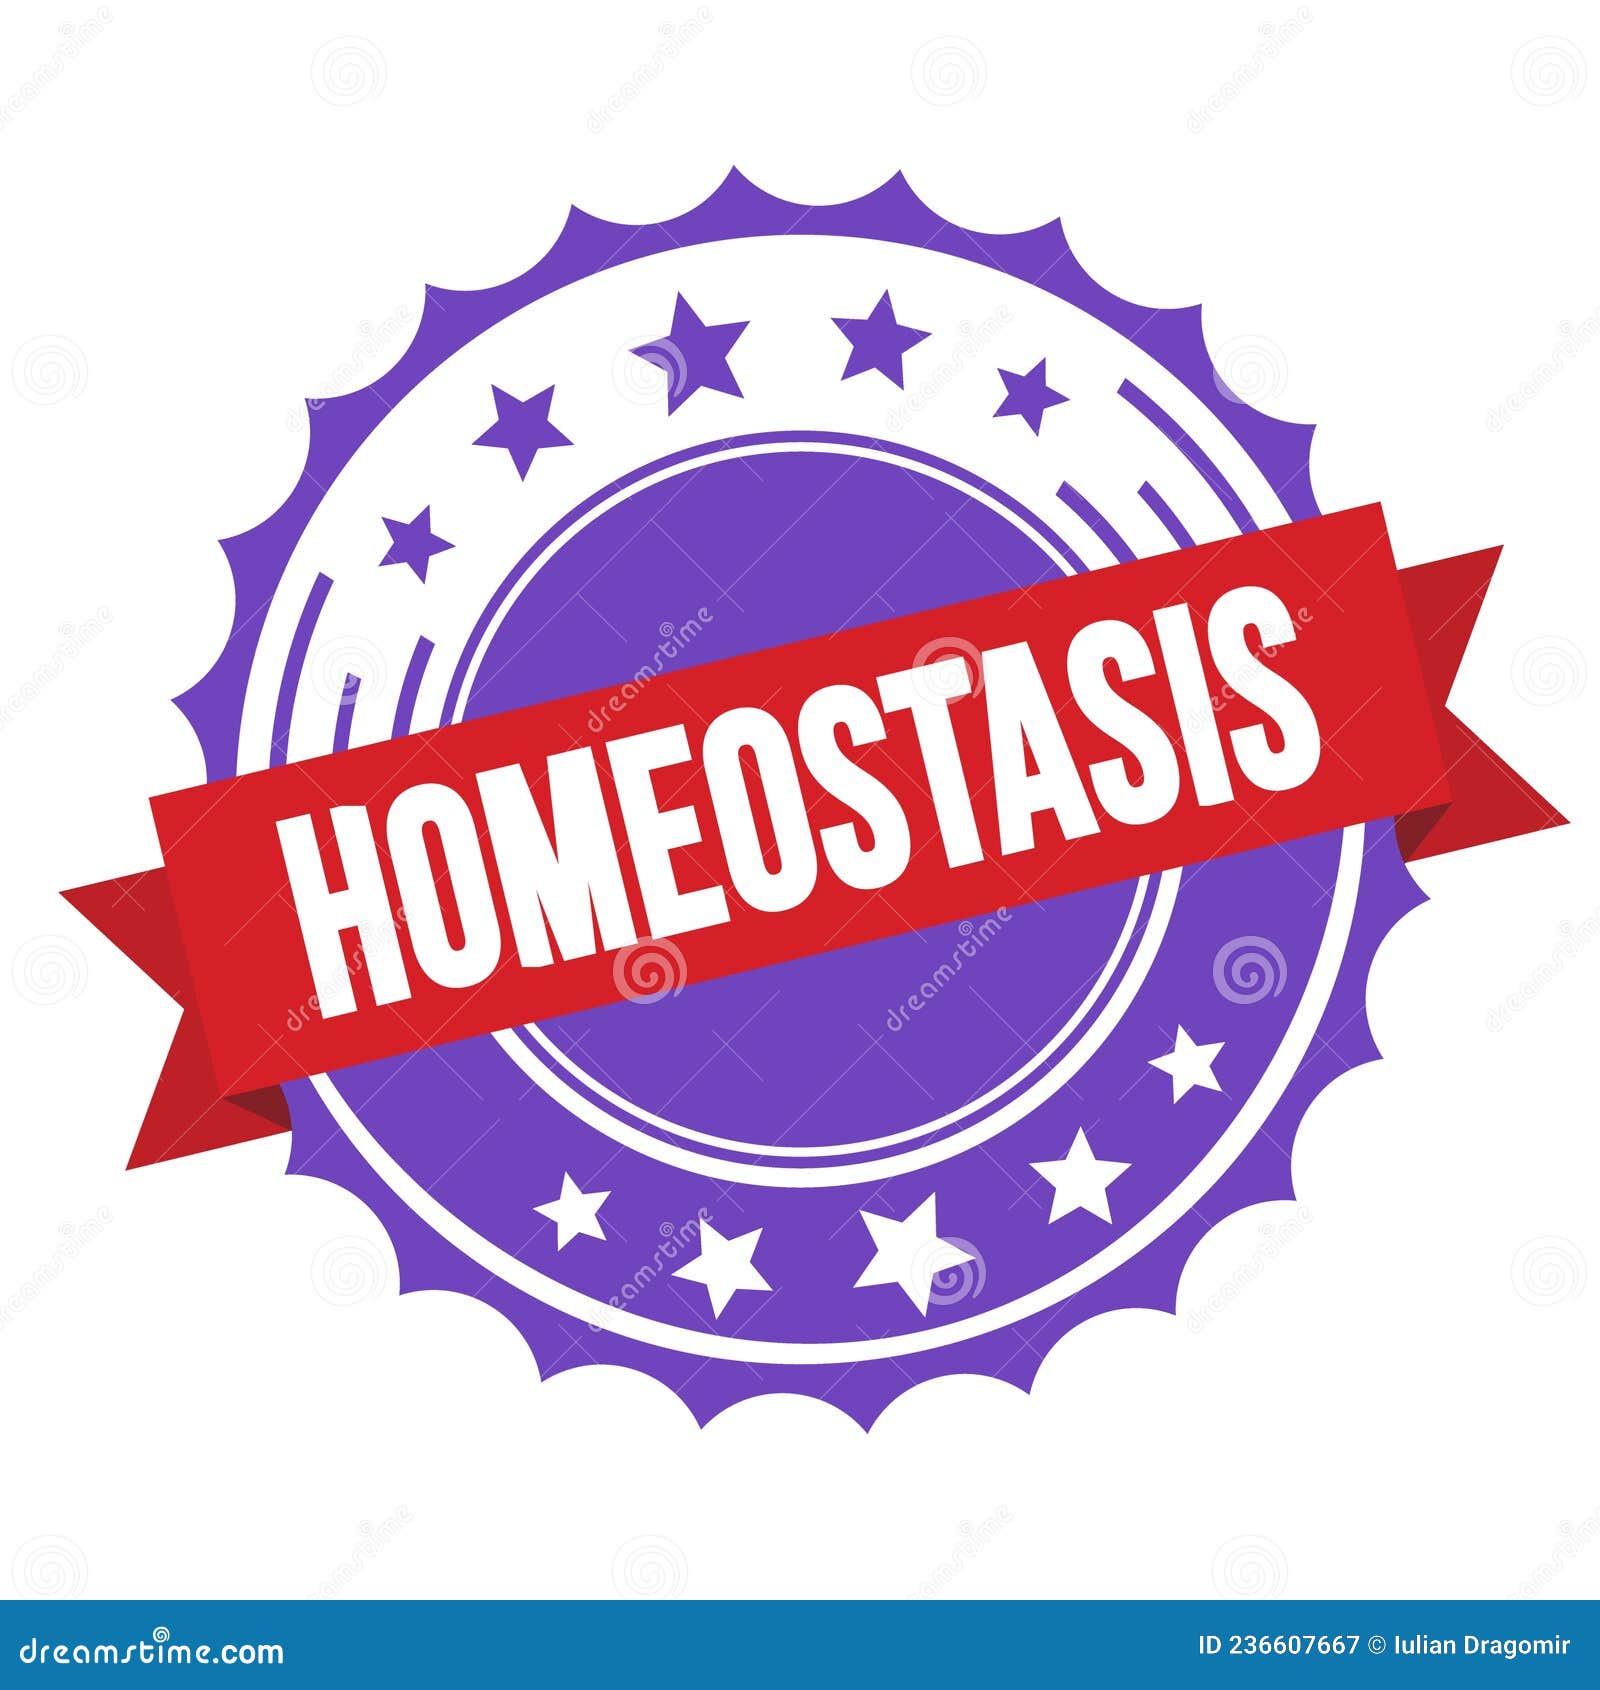 homeostasis text on red violet ribbon stamp